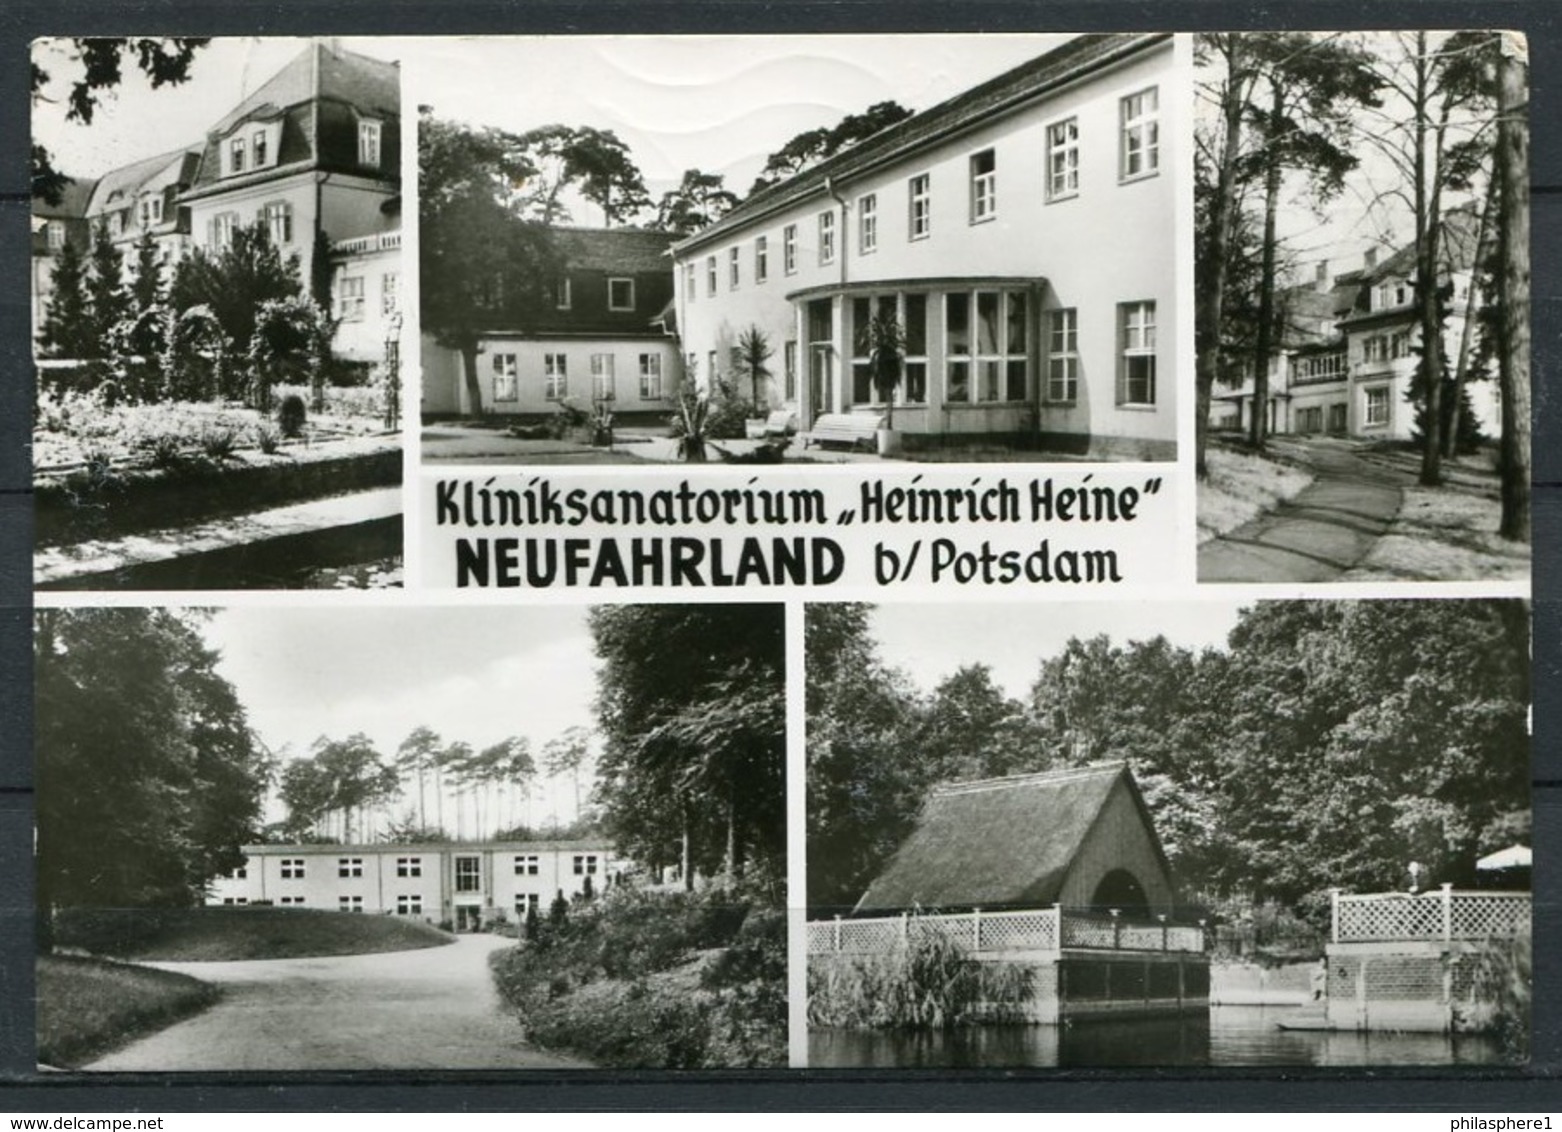 (1185) Kliniksanatorium "Heinrich Heine" / Neufahrland B/Potsdam / Mehrbildkarte S/w - Gel. 1977 - DDR - Neu Fahrland